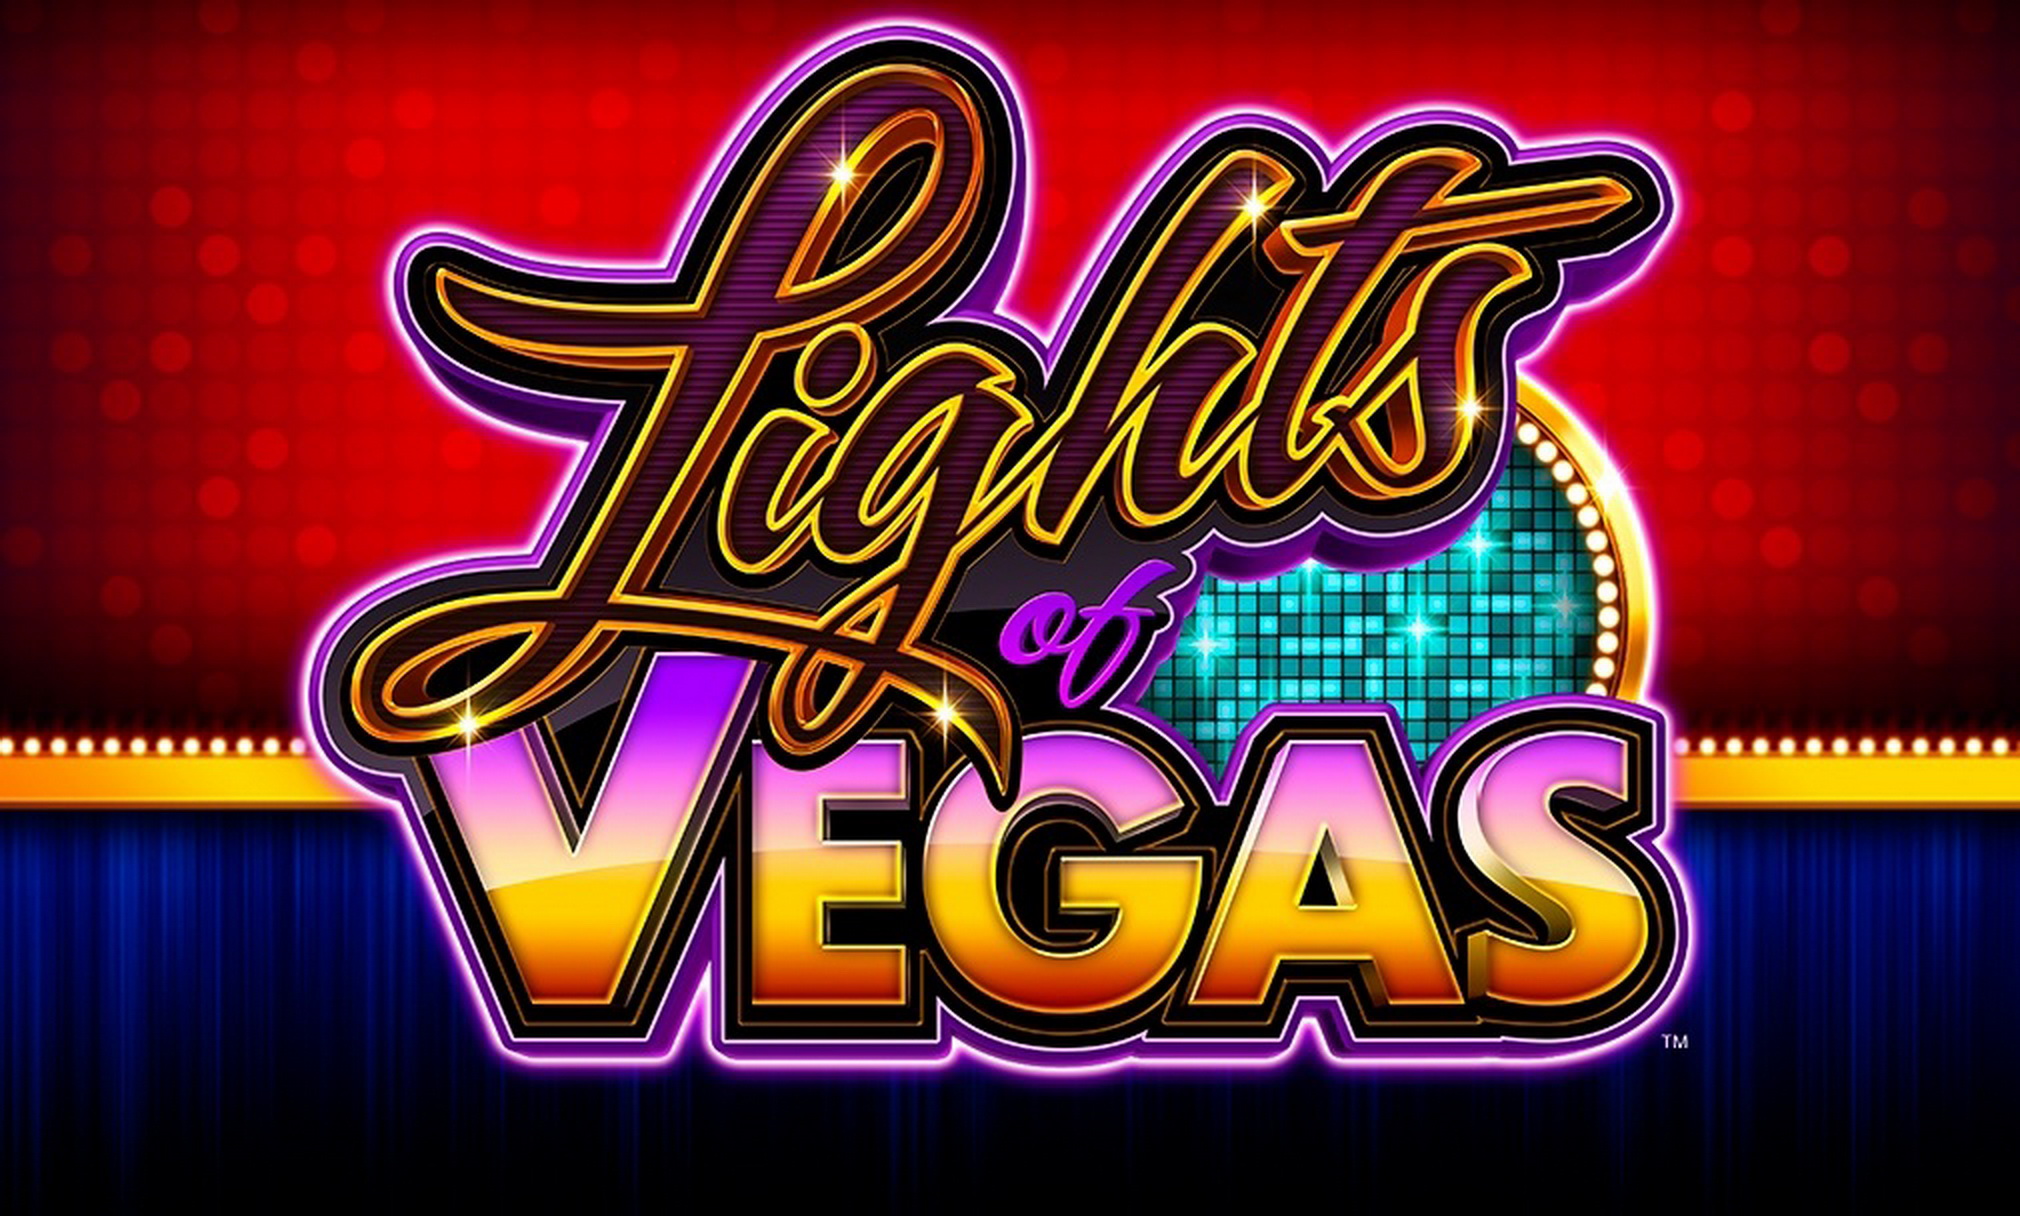 Lights of Vegas demo